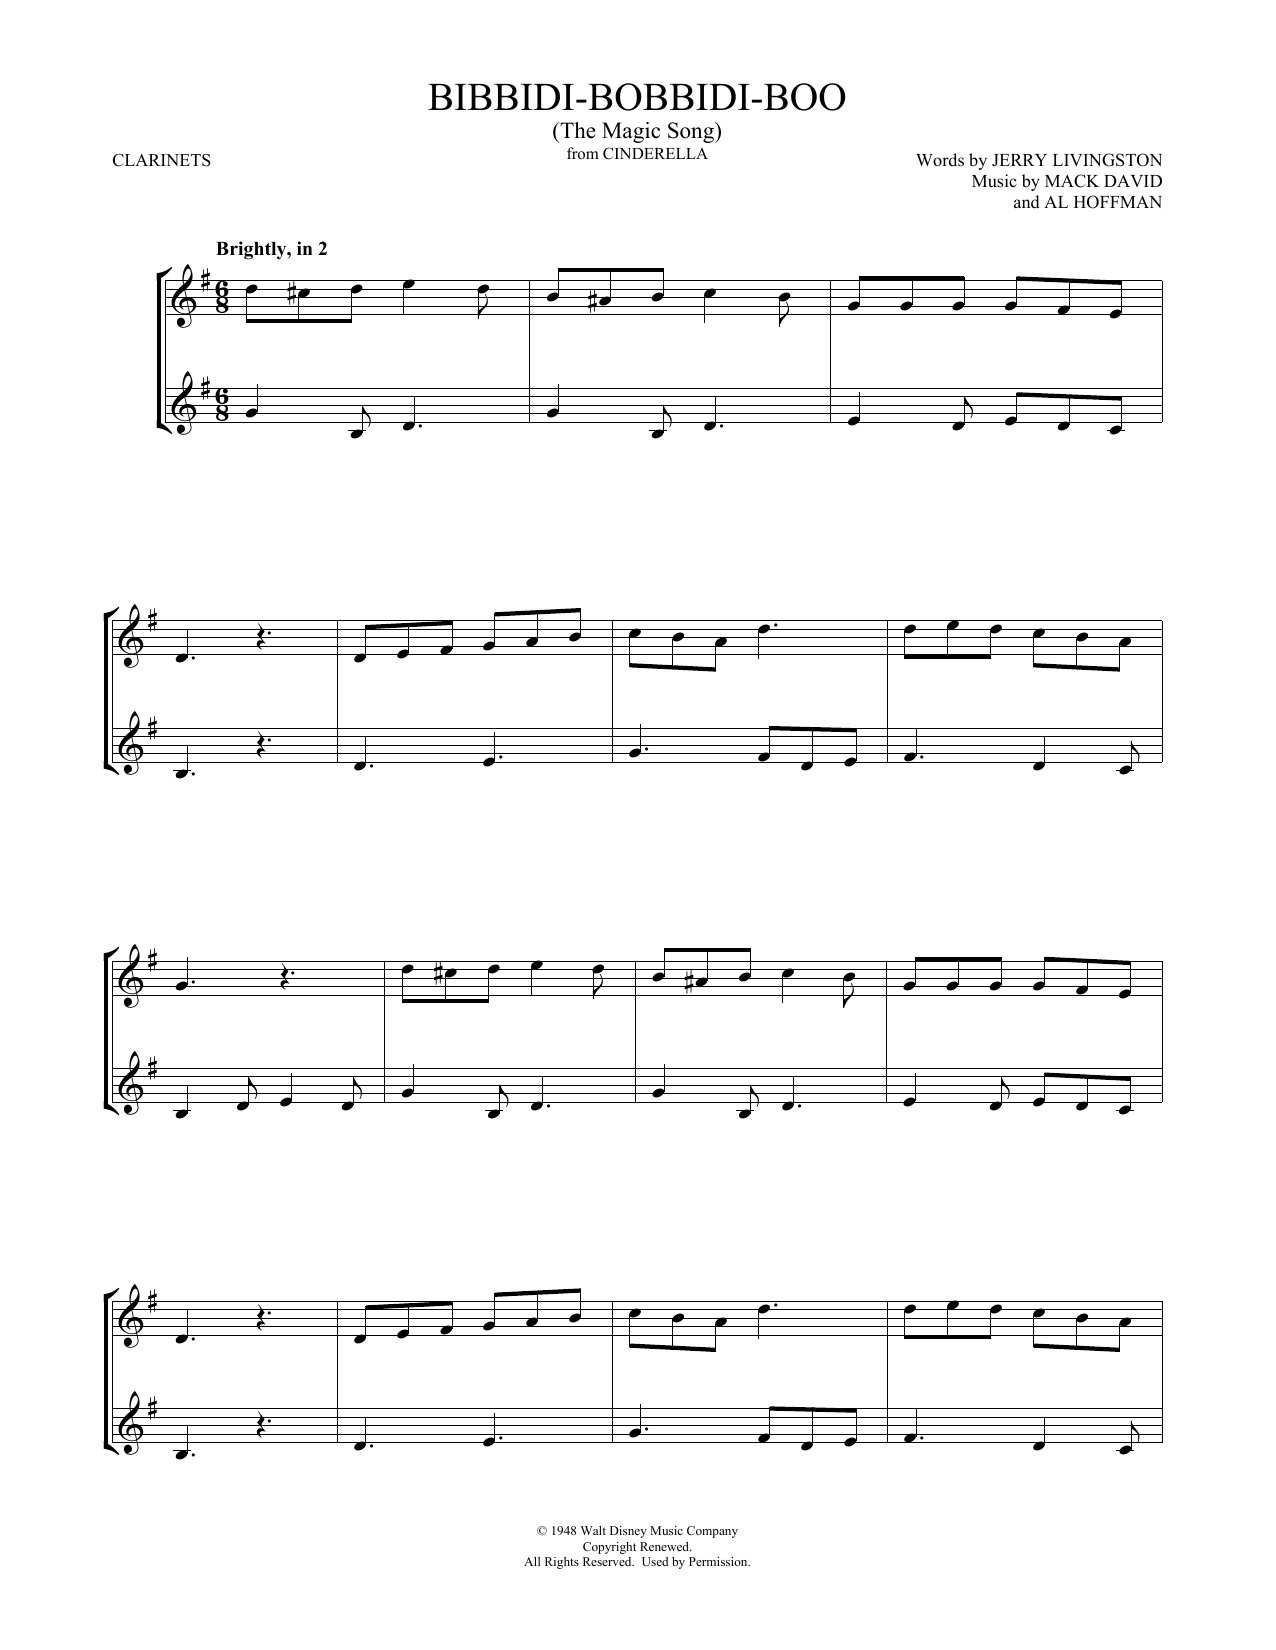 Verna Felton Bibbidi-Bobbidi-Boo (The Magic Song) (from Cinderella) Sheet Music Notes & Chords for Violin Duet - Download or Print PDF